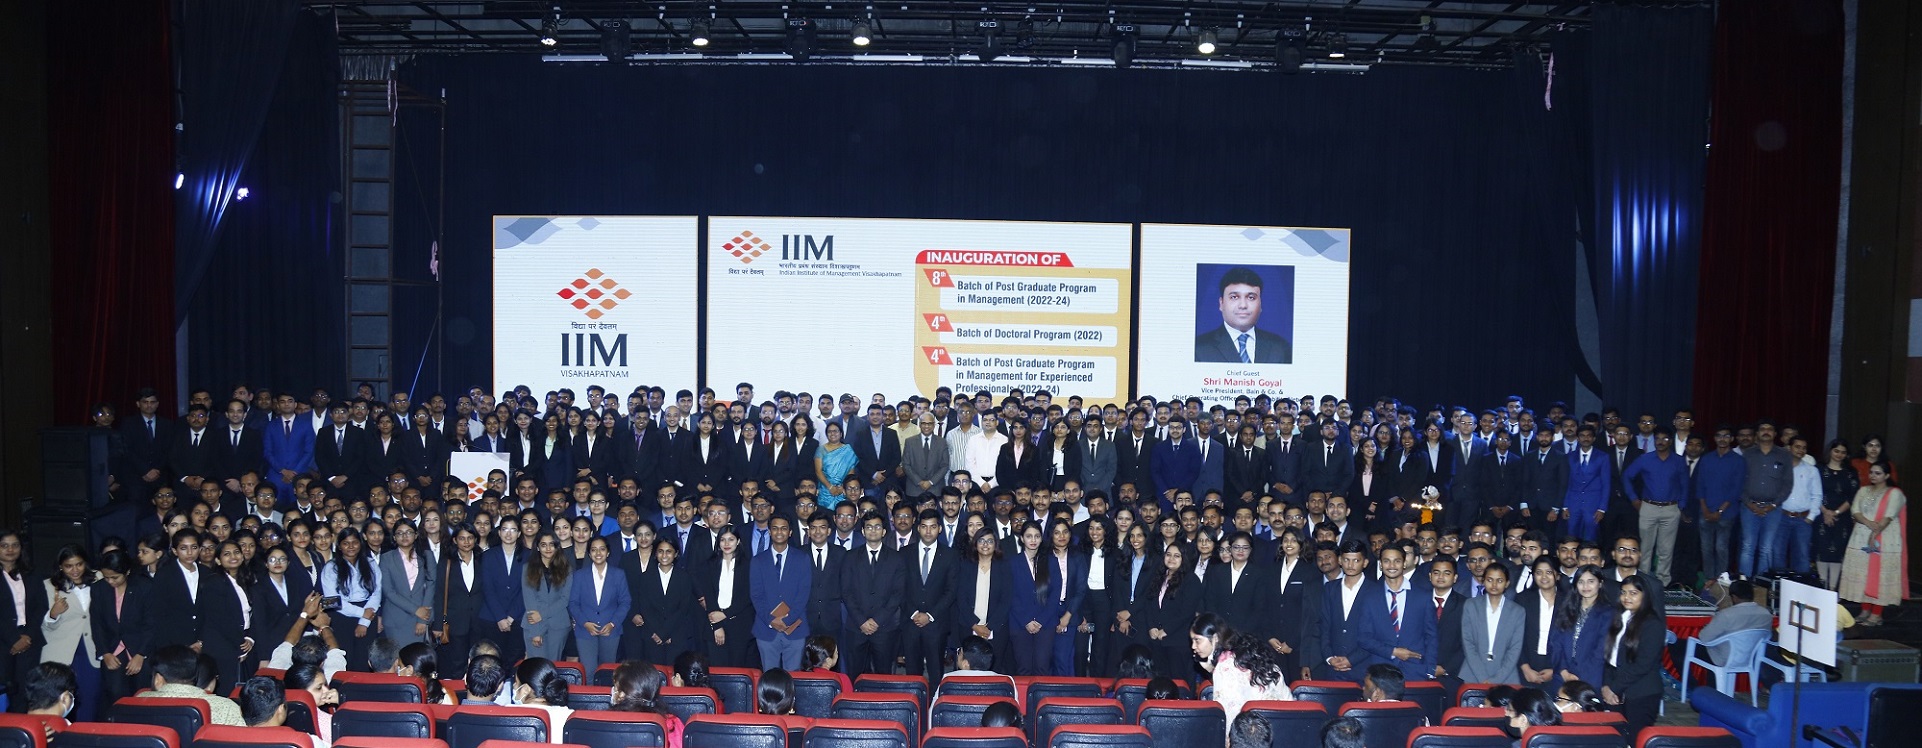 IIM Visakhapatnam inaugurates the flagship programs